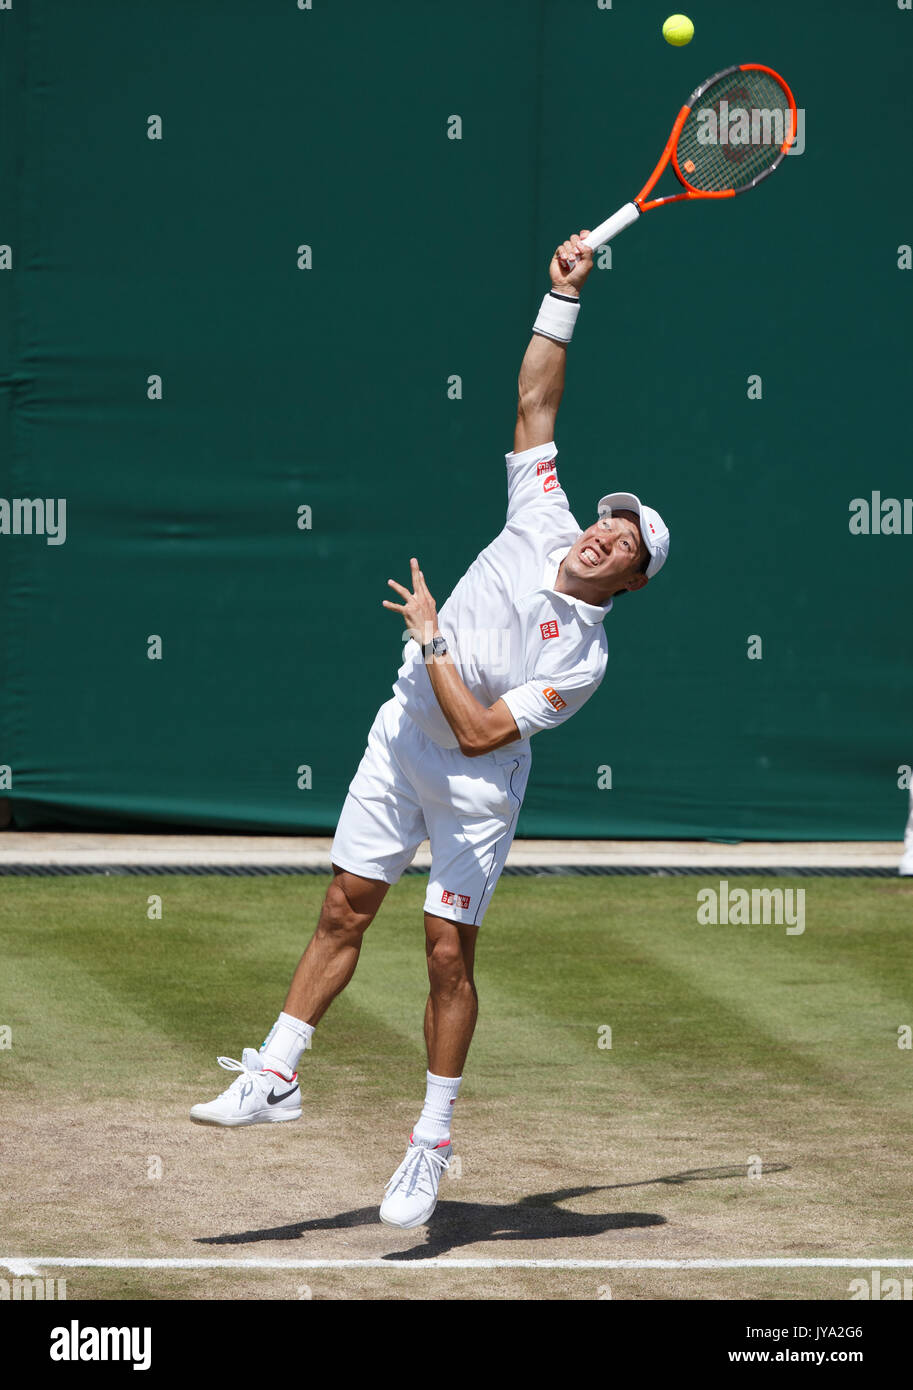 Kei Nishikori en acción en Wimbledon, Londres, Inglaterra, Reino Unido. Foto de stock